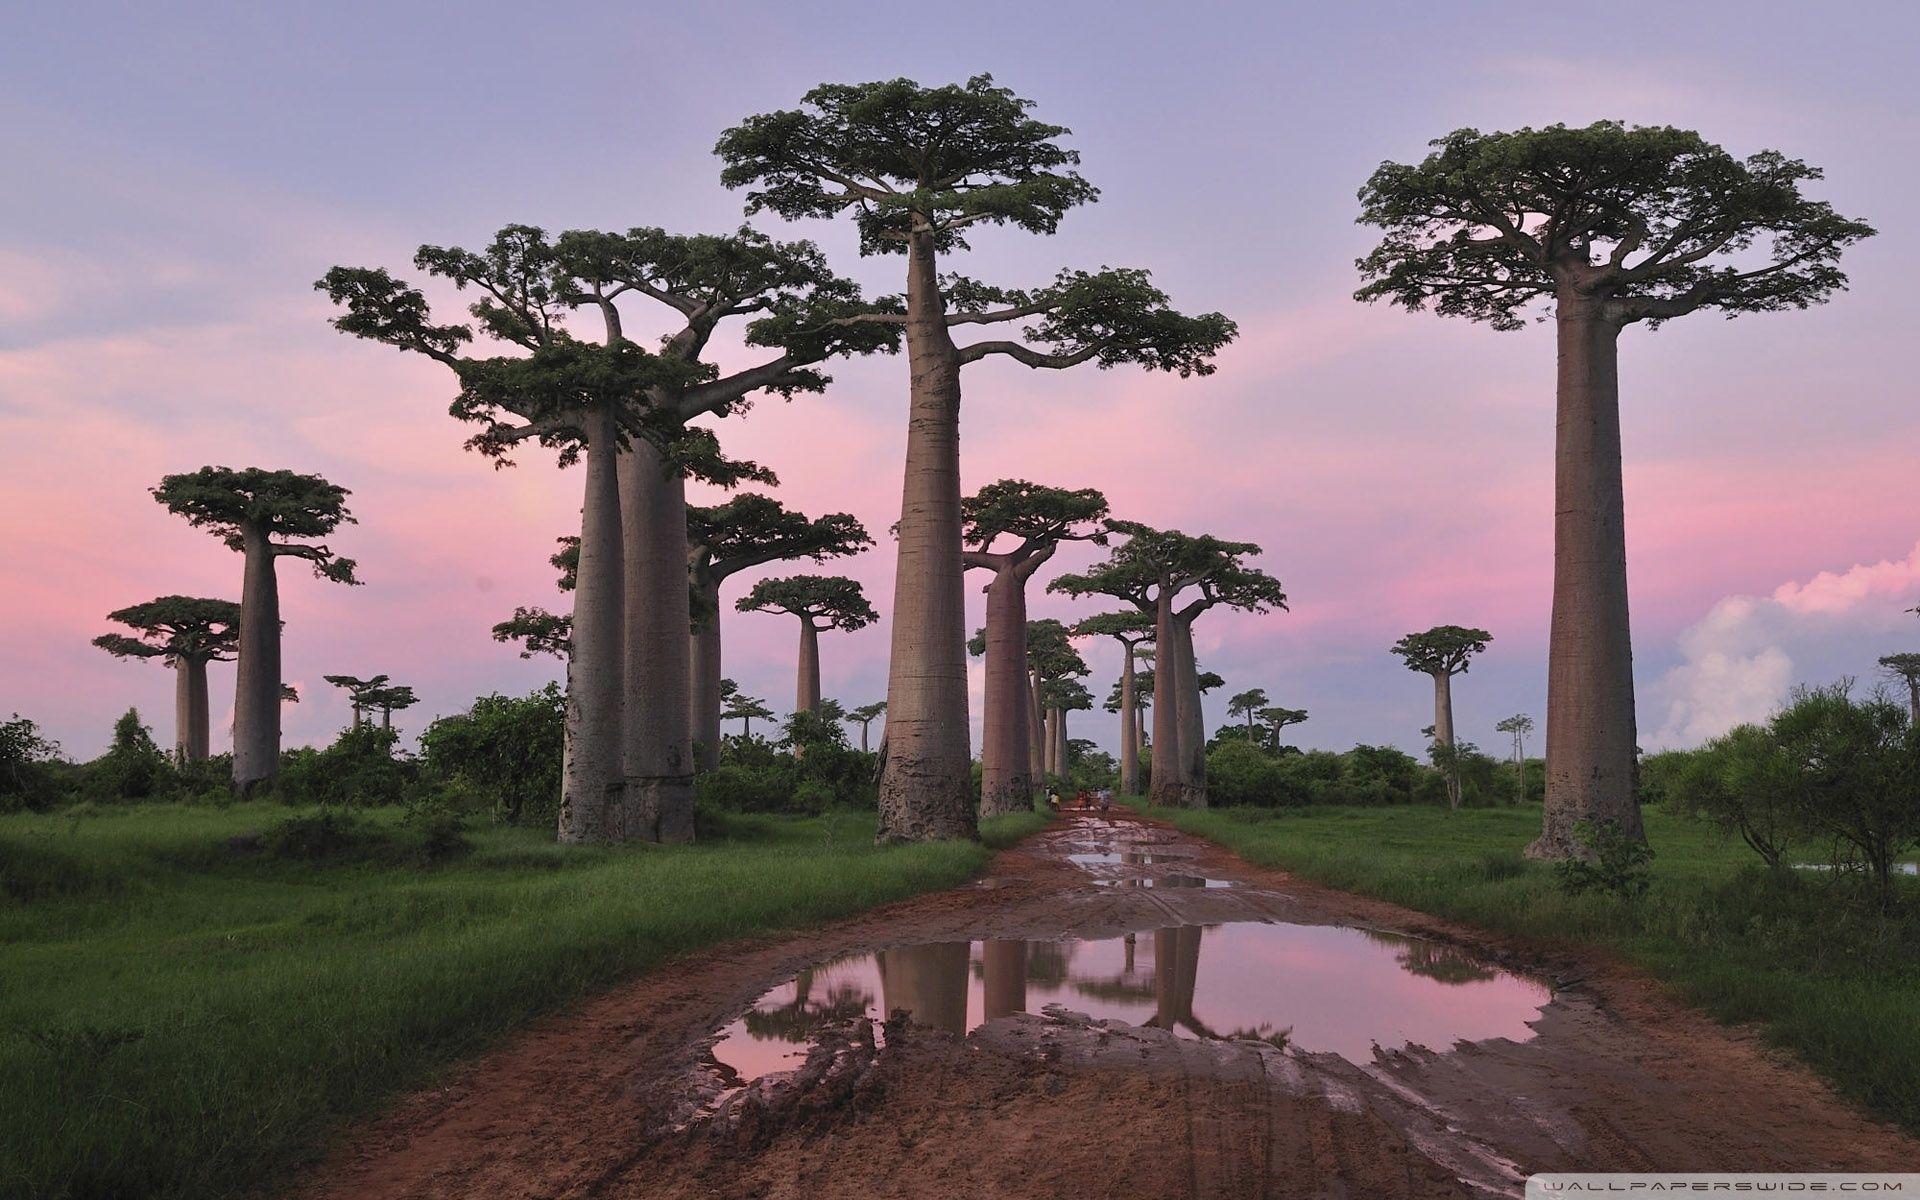 Madagascar Landscape Wallpapers Top Free Madagascar Landscape Images, Photos, Reviews